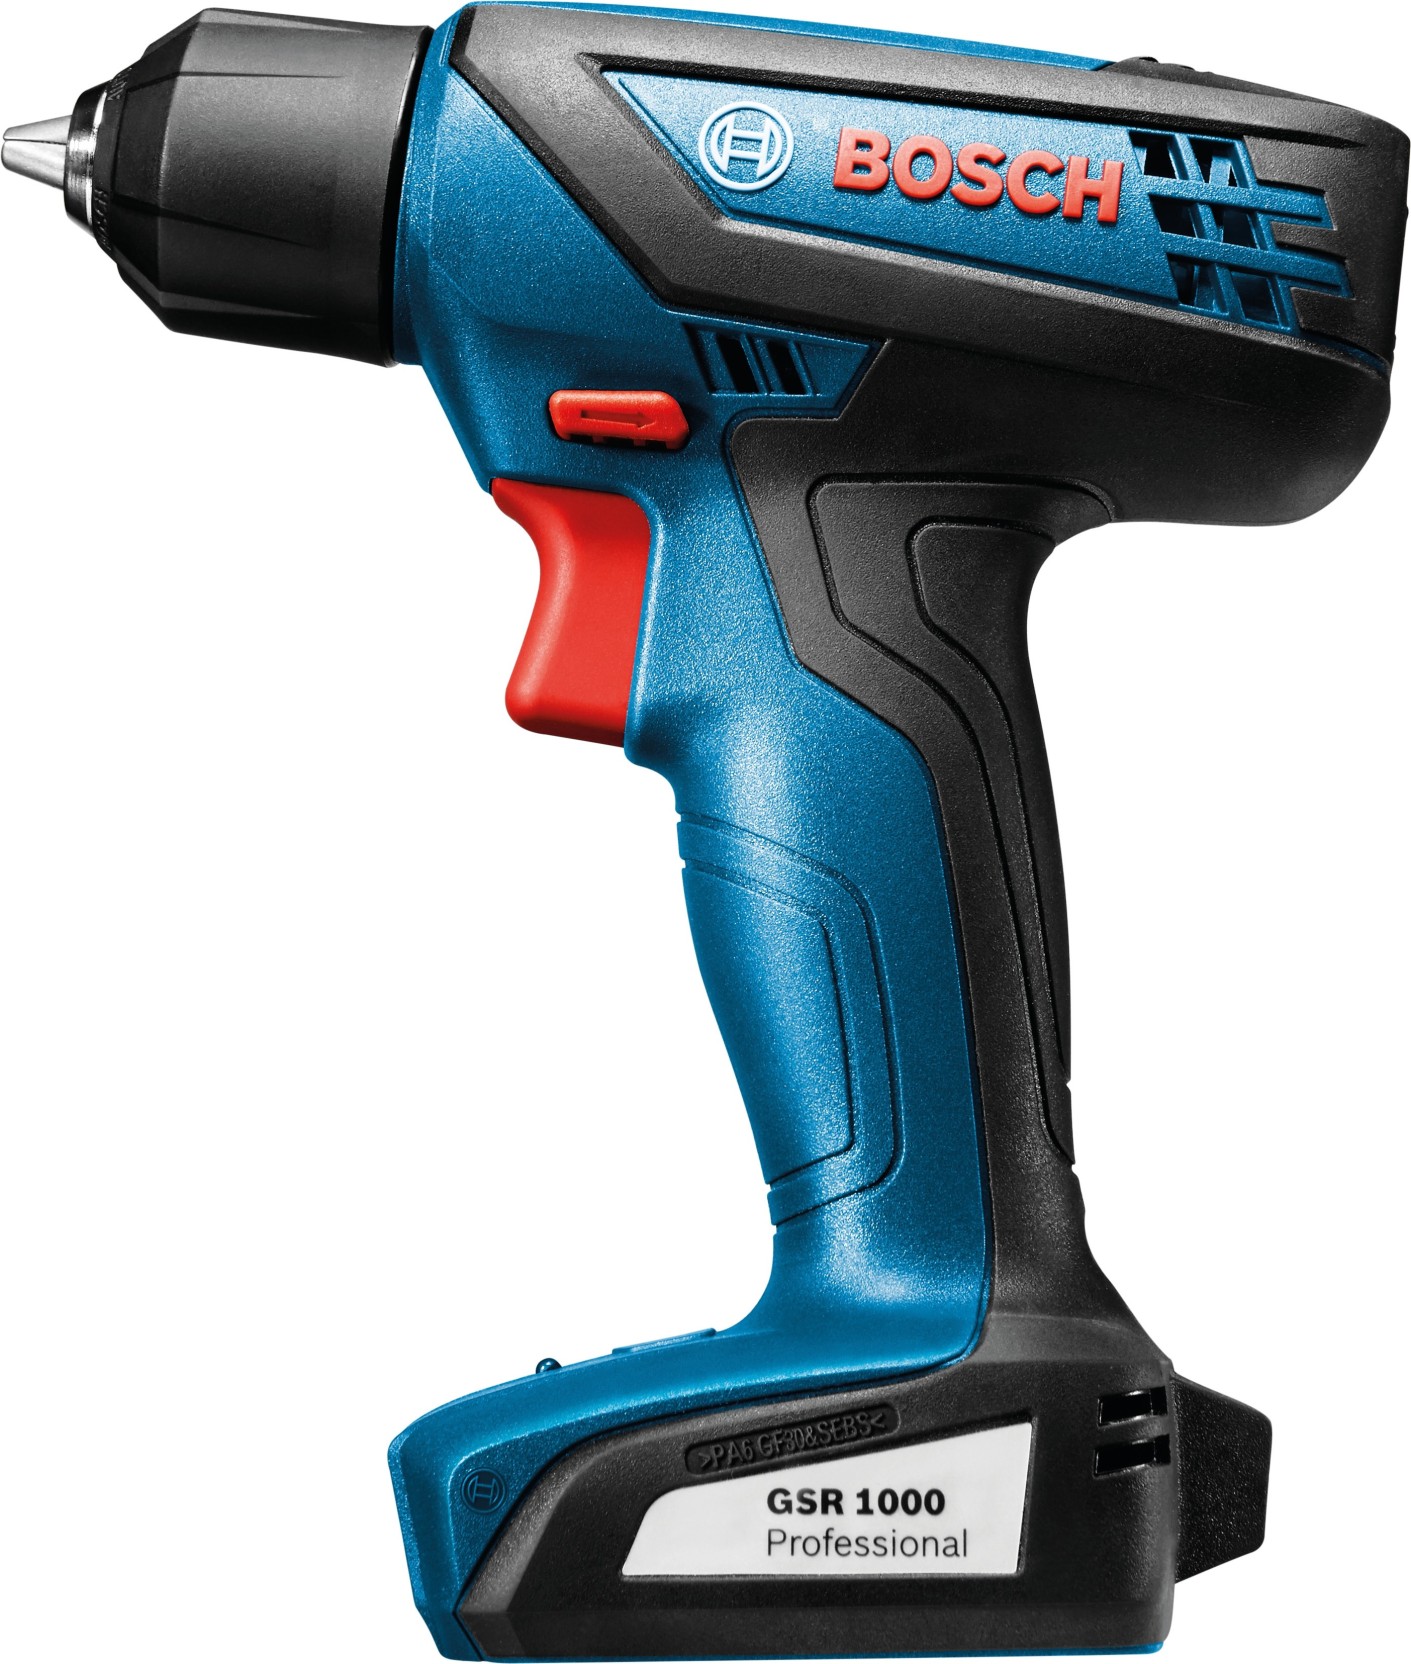 Bosch GSR 1000 Cordless drill Driver Power Tool Kit Price in India - Buy Bosch GSR 1000 Cordless ...